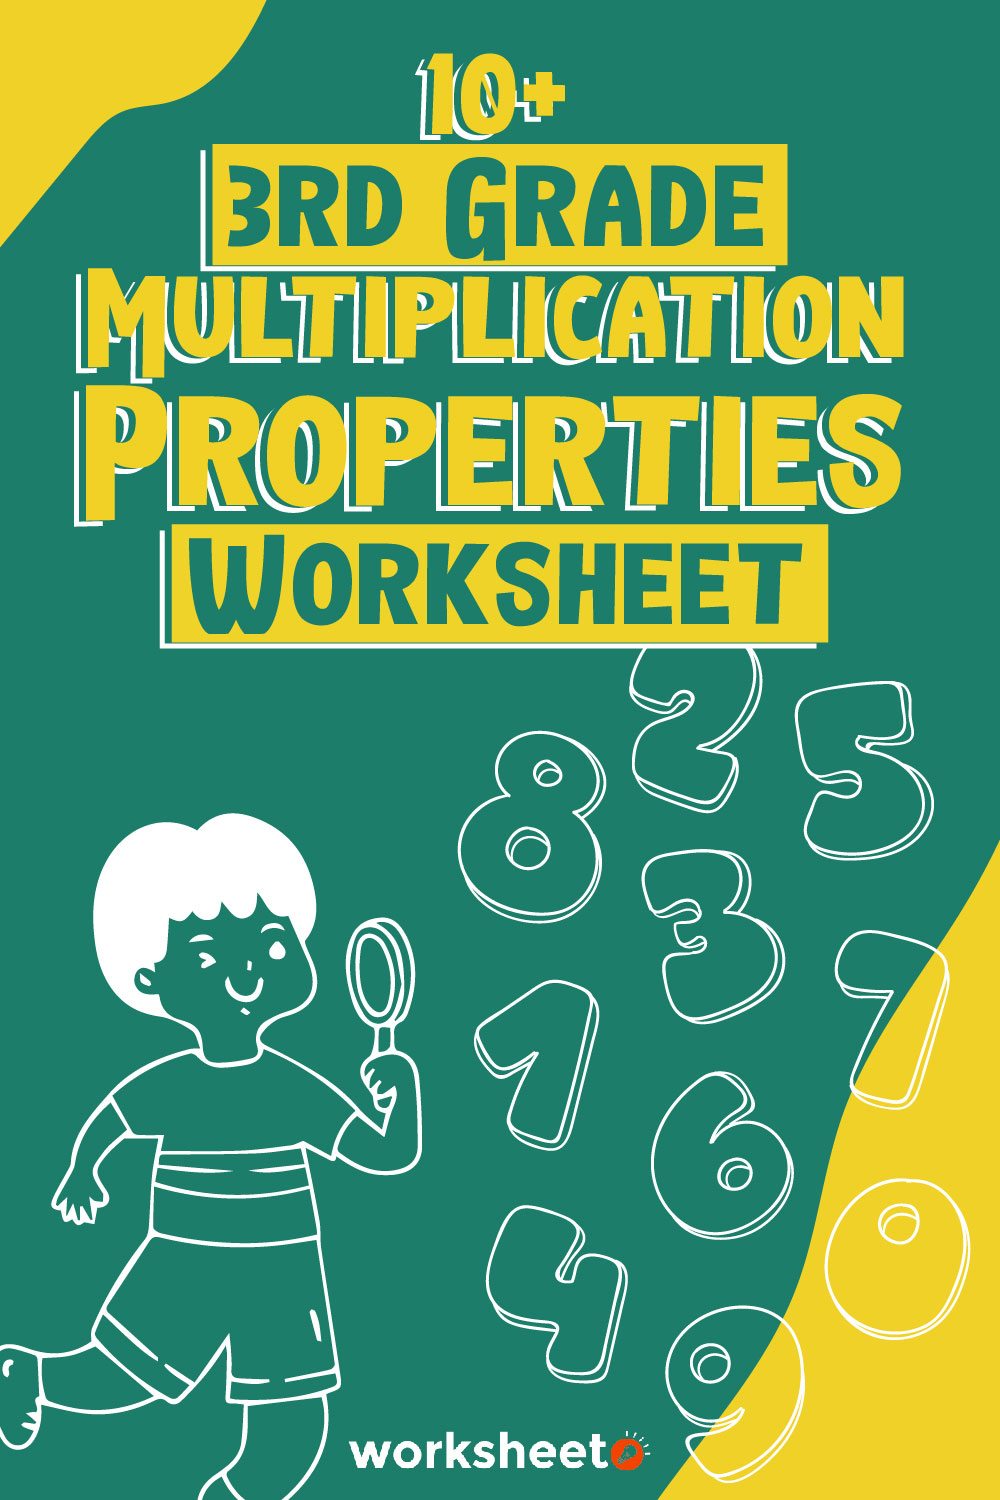 3rd Grade Multiplication Properties Worksheet